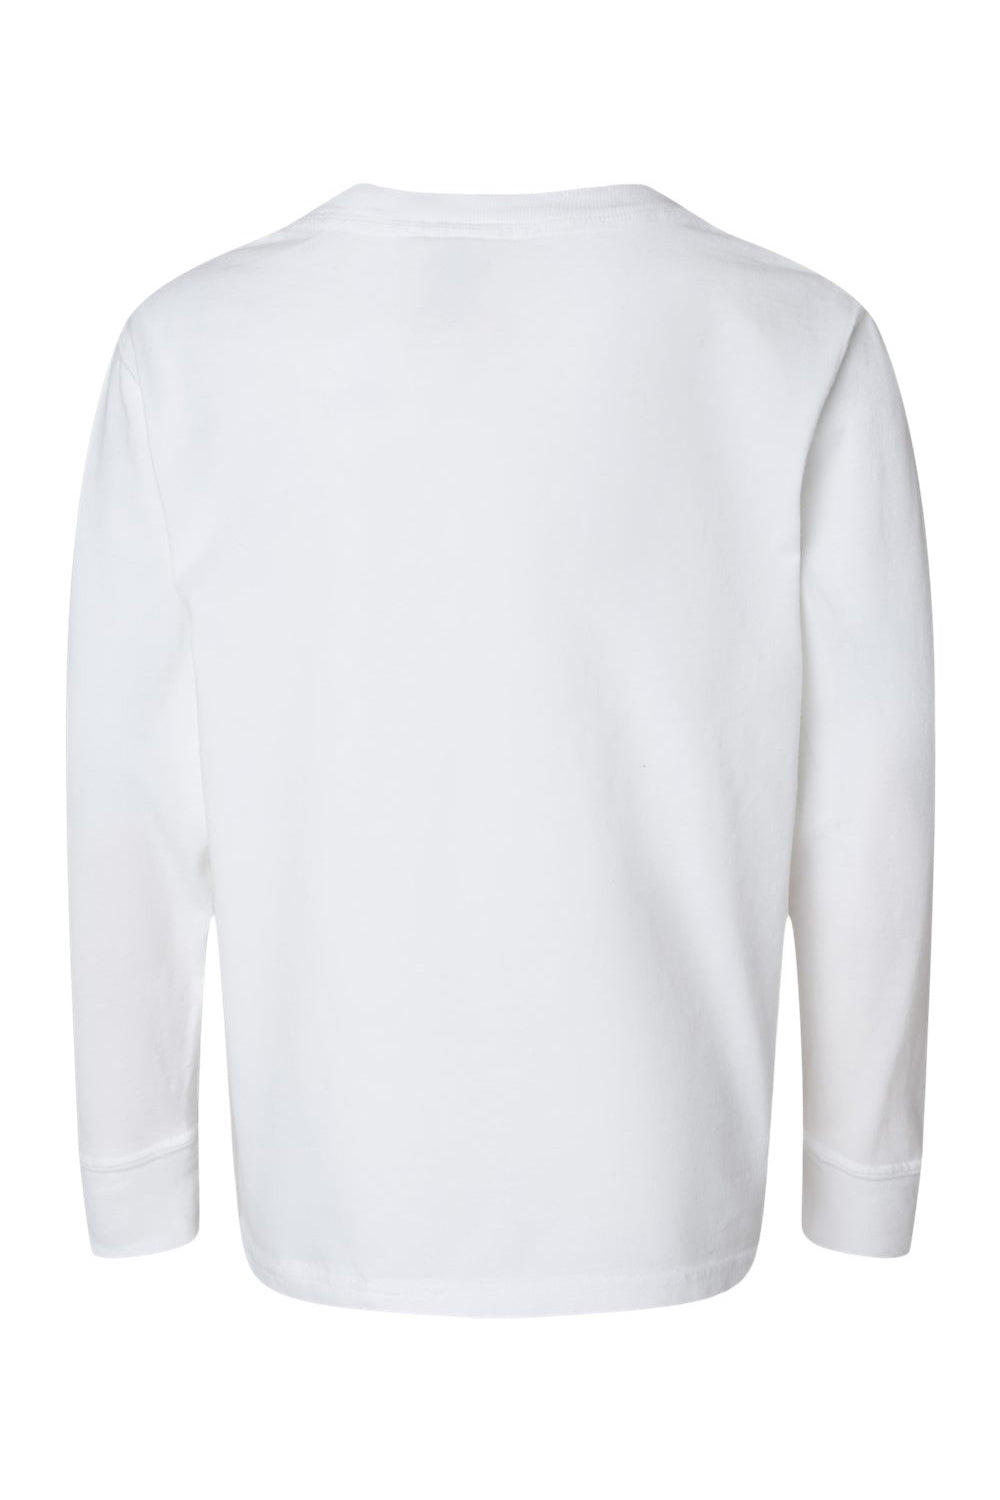 ComfortWash By Hanes GDH275 Youth Garment Dyed Long Sleeve Crewneck T-Shirt White Flat Back